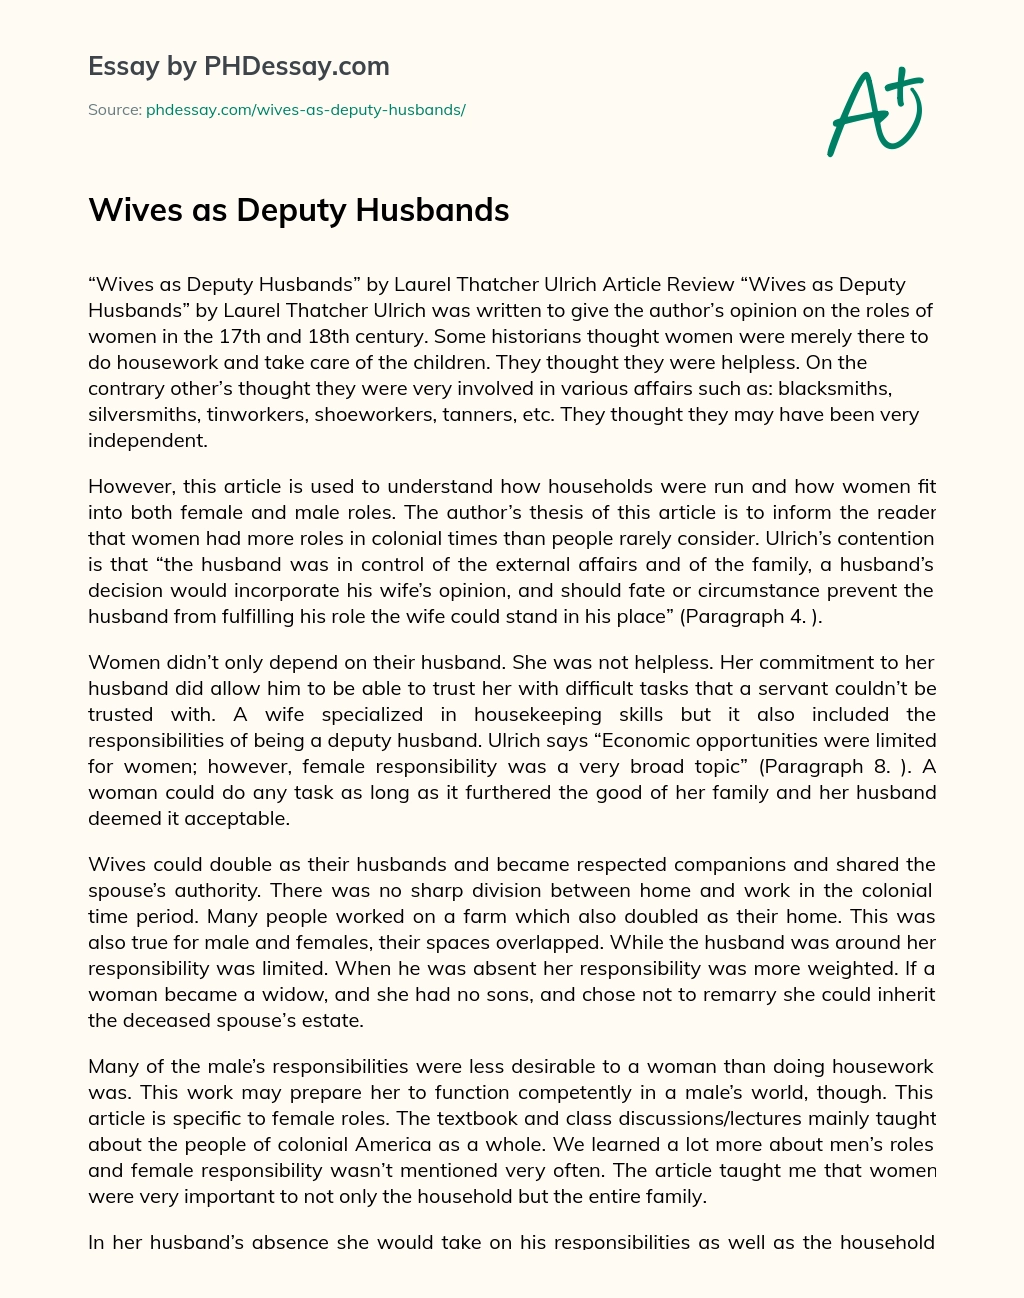 Wives as Deputy Husbands essay